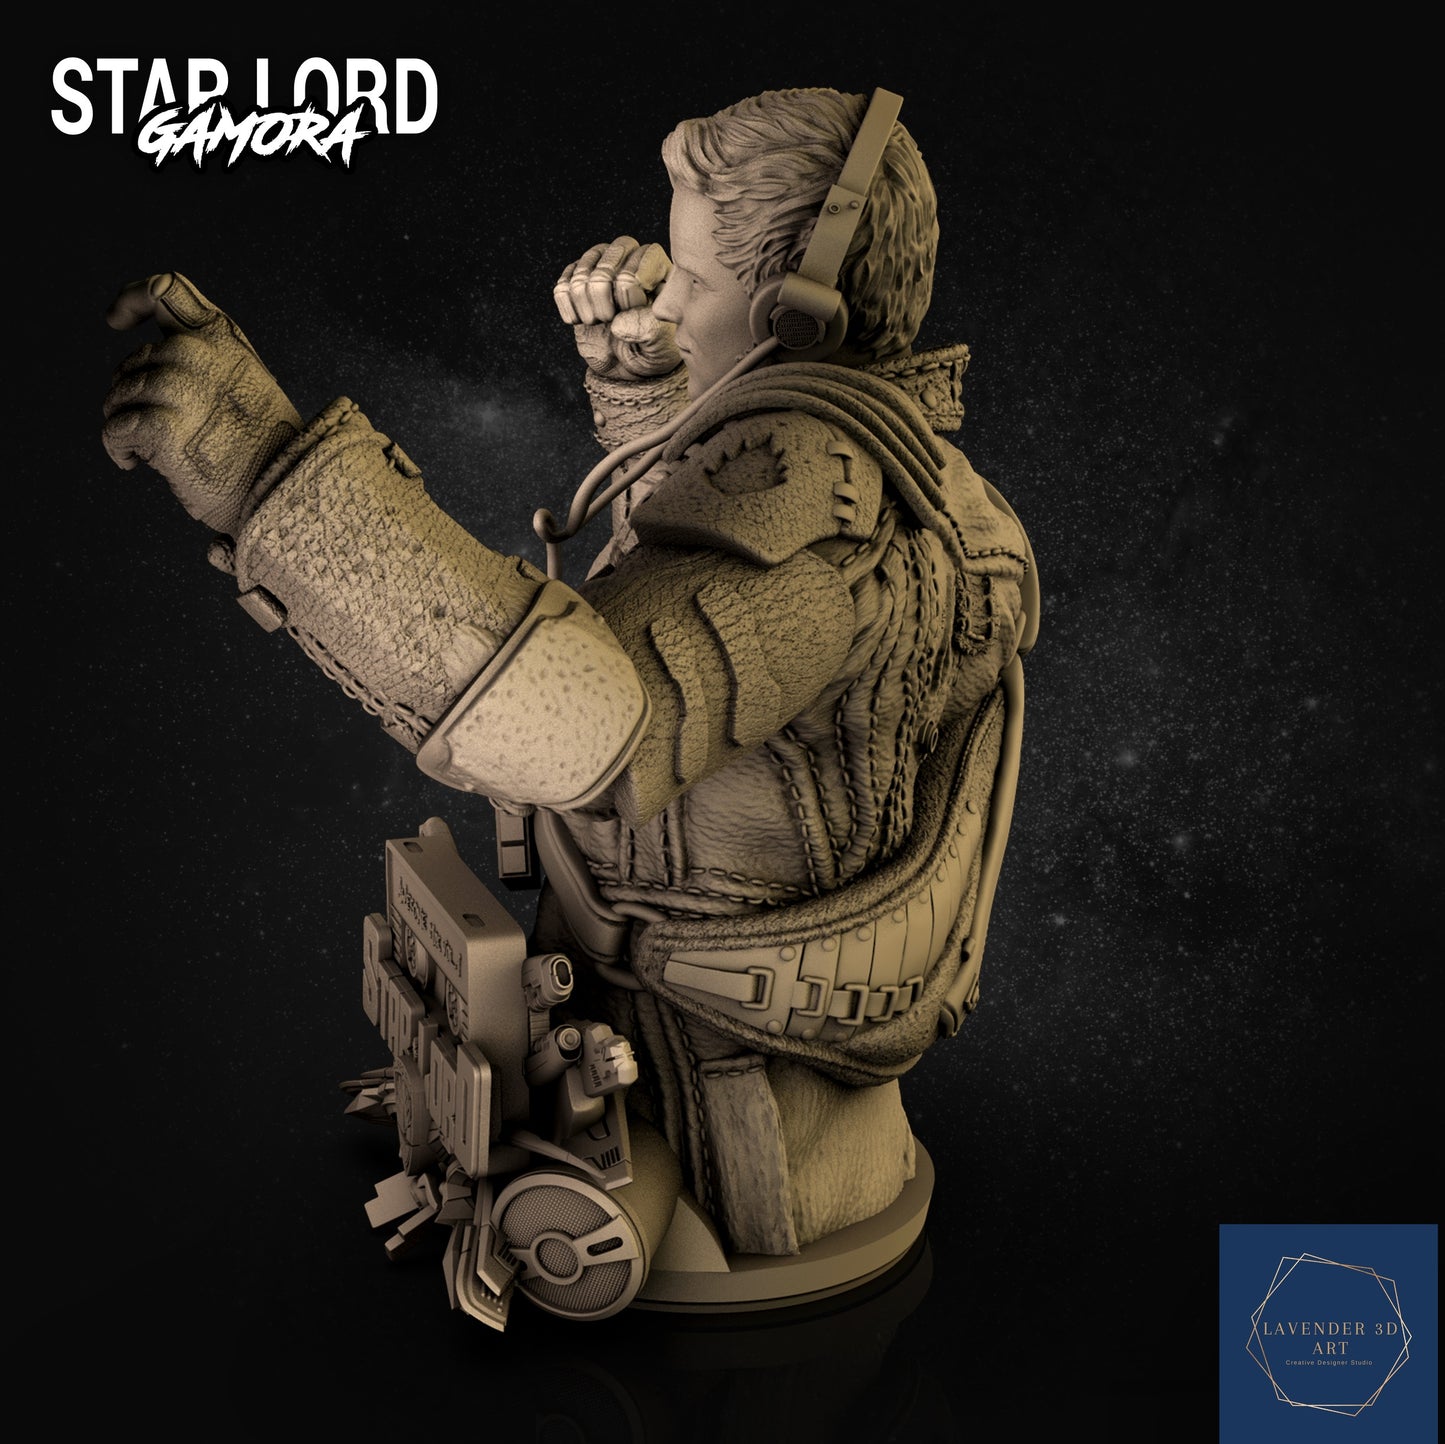 Starlord Bust STL Avengers STL Fichier Impression 3D Design Film Personnage STL Fichier S042